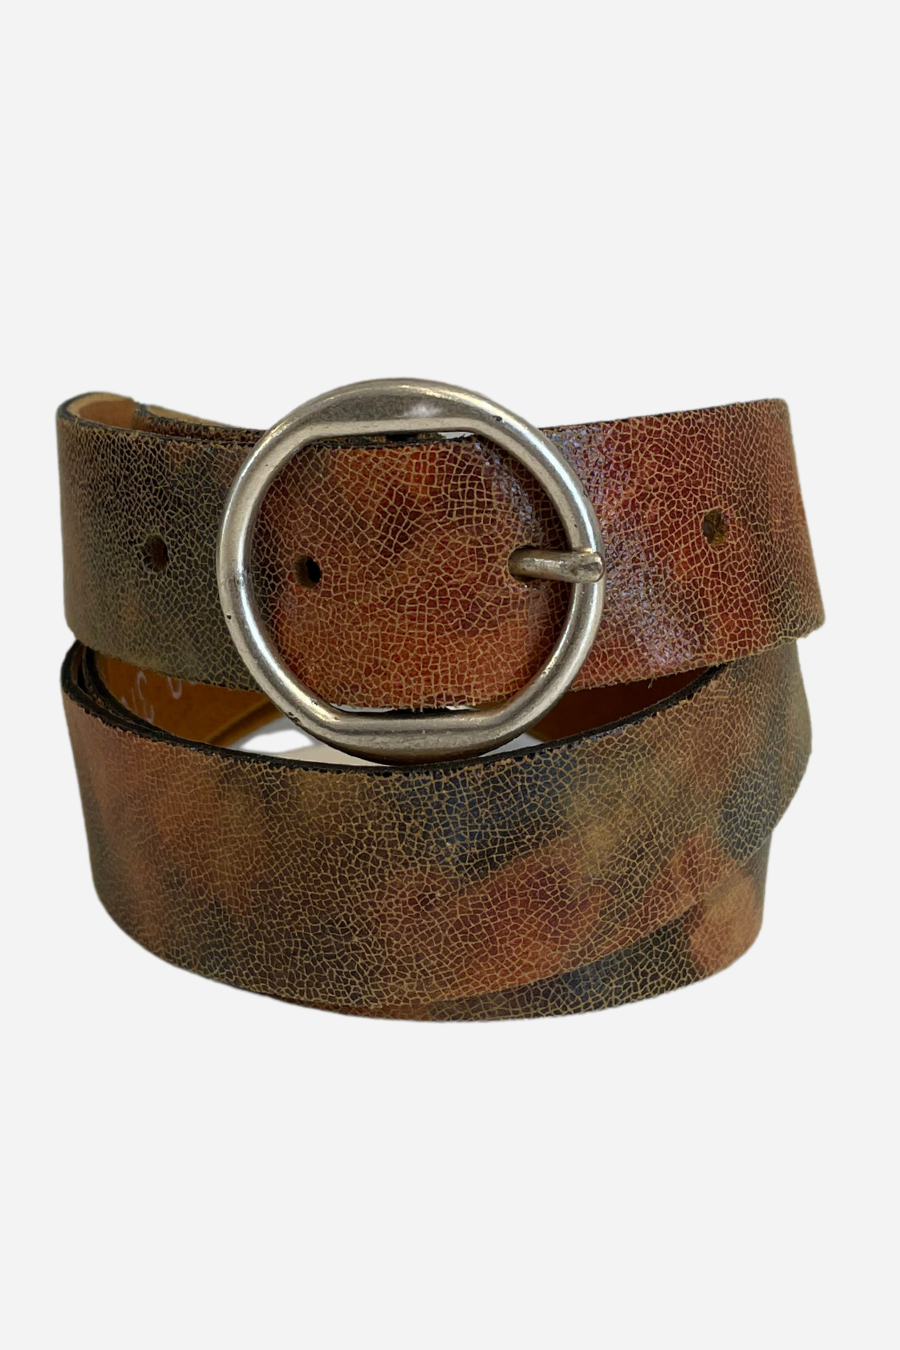 Distressed Cognac Leather Belt